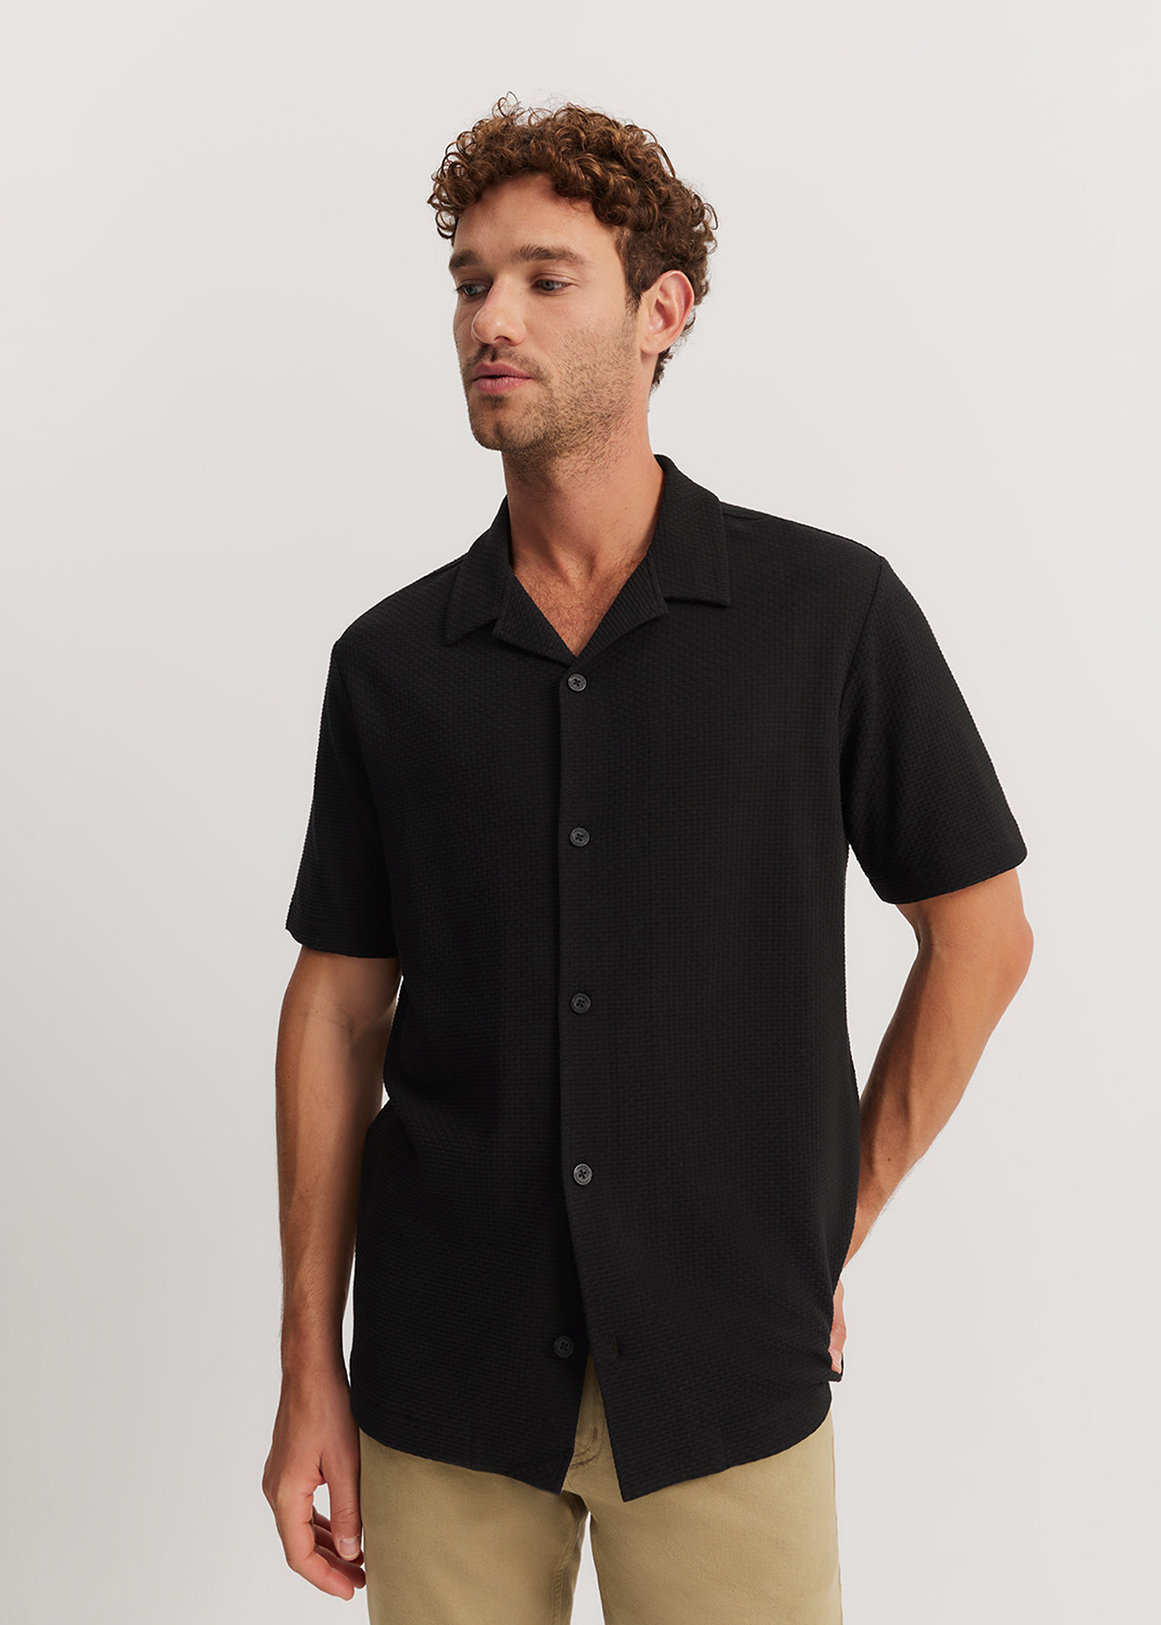 Australian Cotton Blend Textured Knit Short Sleeve Shirt | Woolworths.co.za